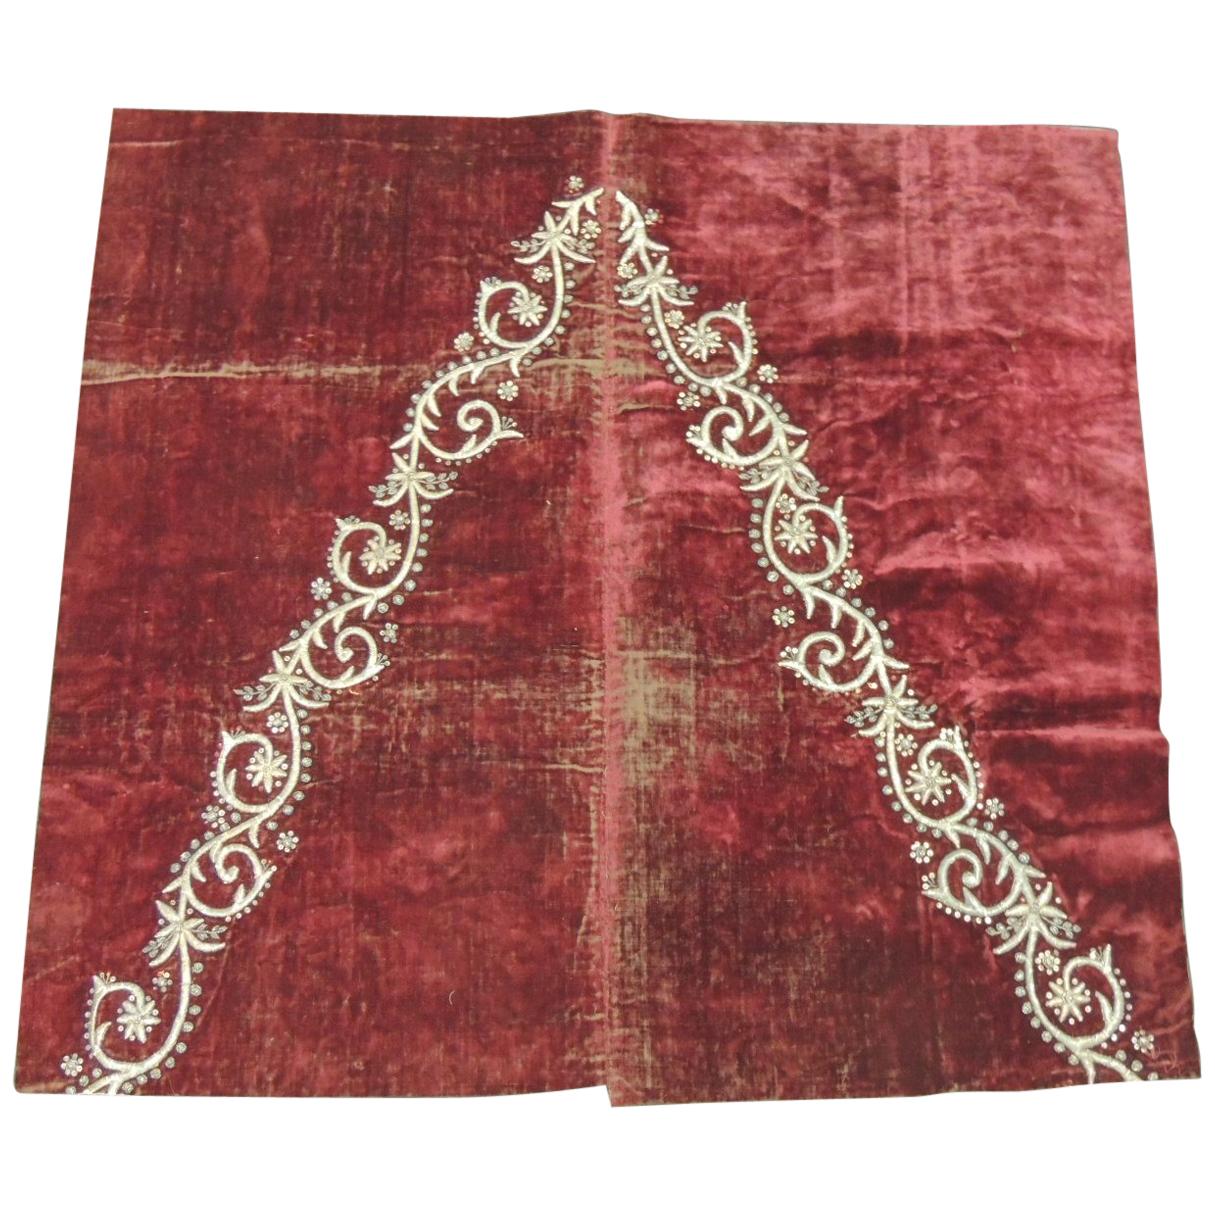 19th Century Ottoman Empire Persian Silver Metallic Threads Embroidered Textile